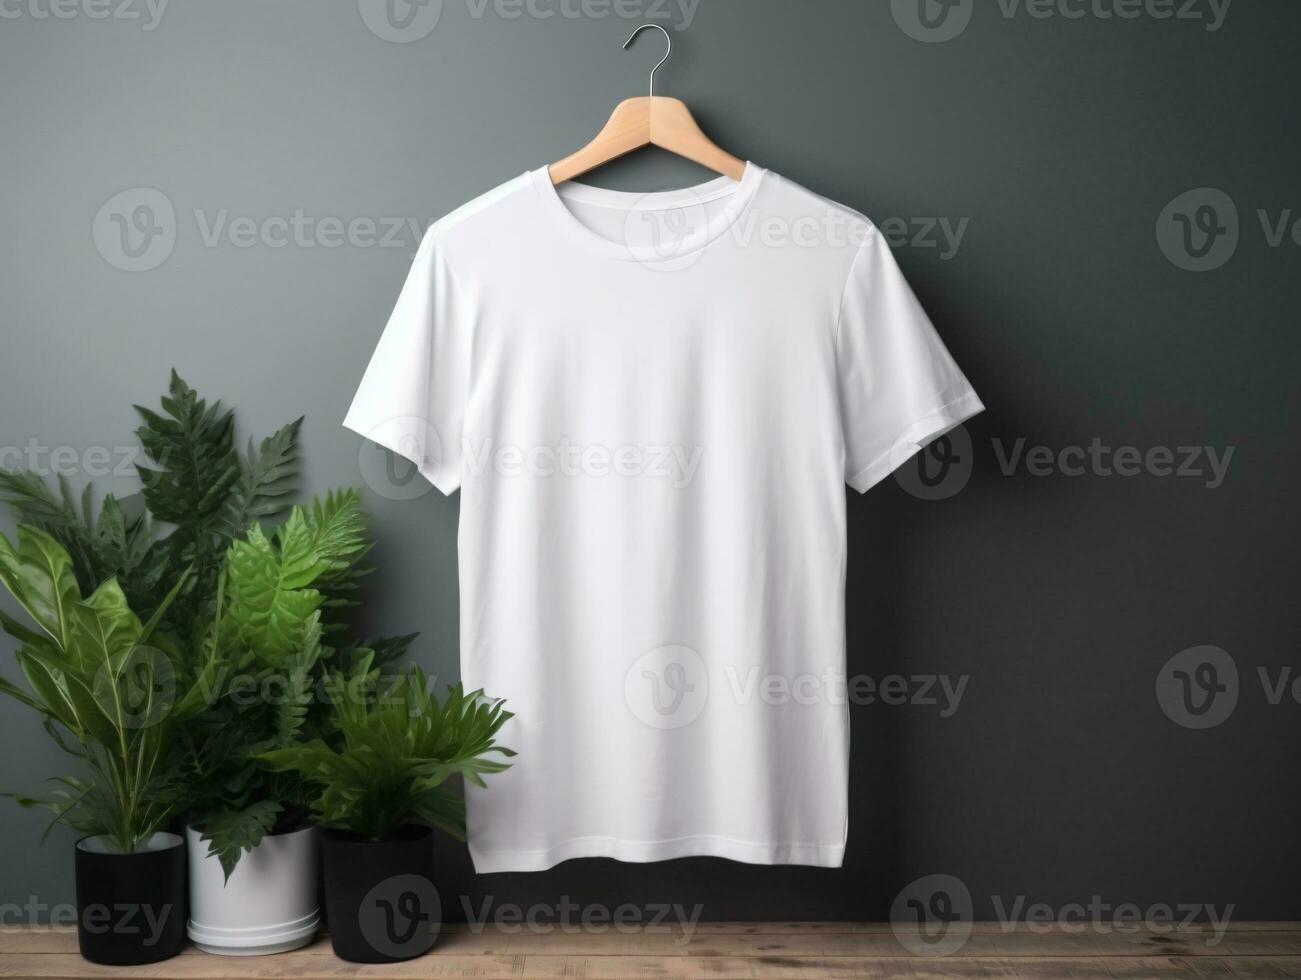 Commercial white t-shirt mockup photo